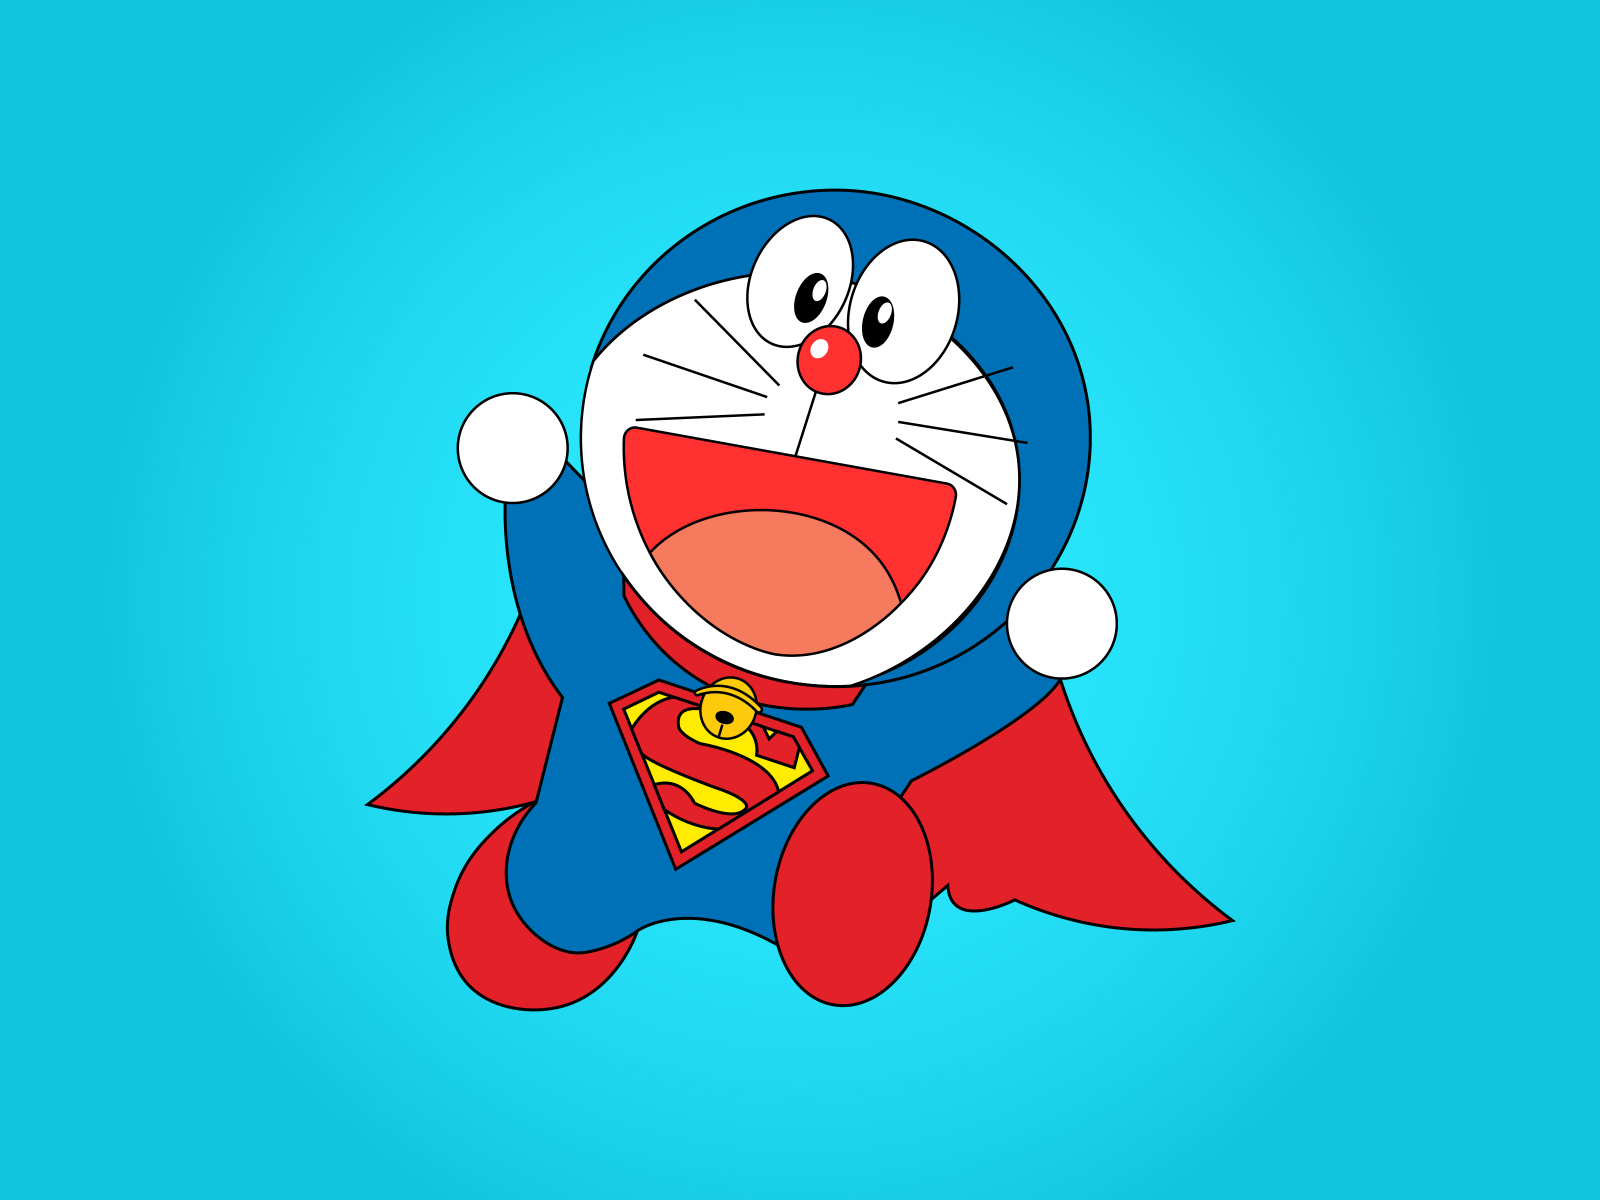 Doraemon Hero by Brifastudio on Dribbble